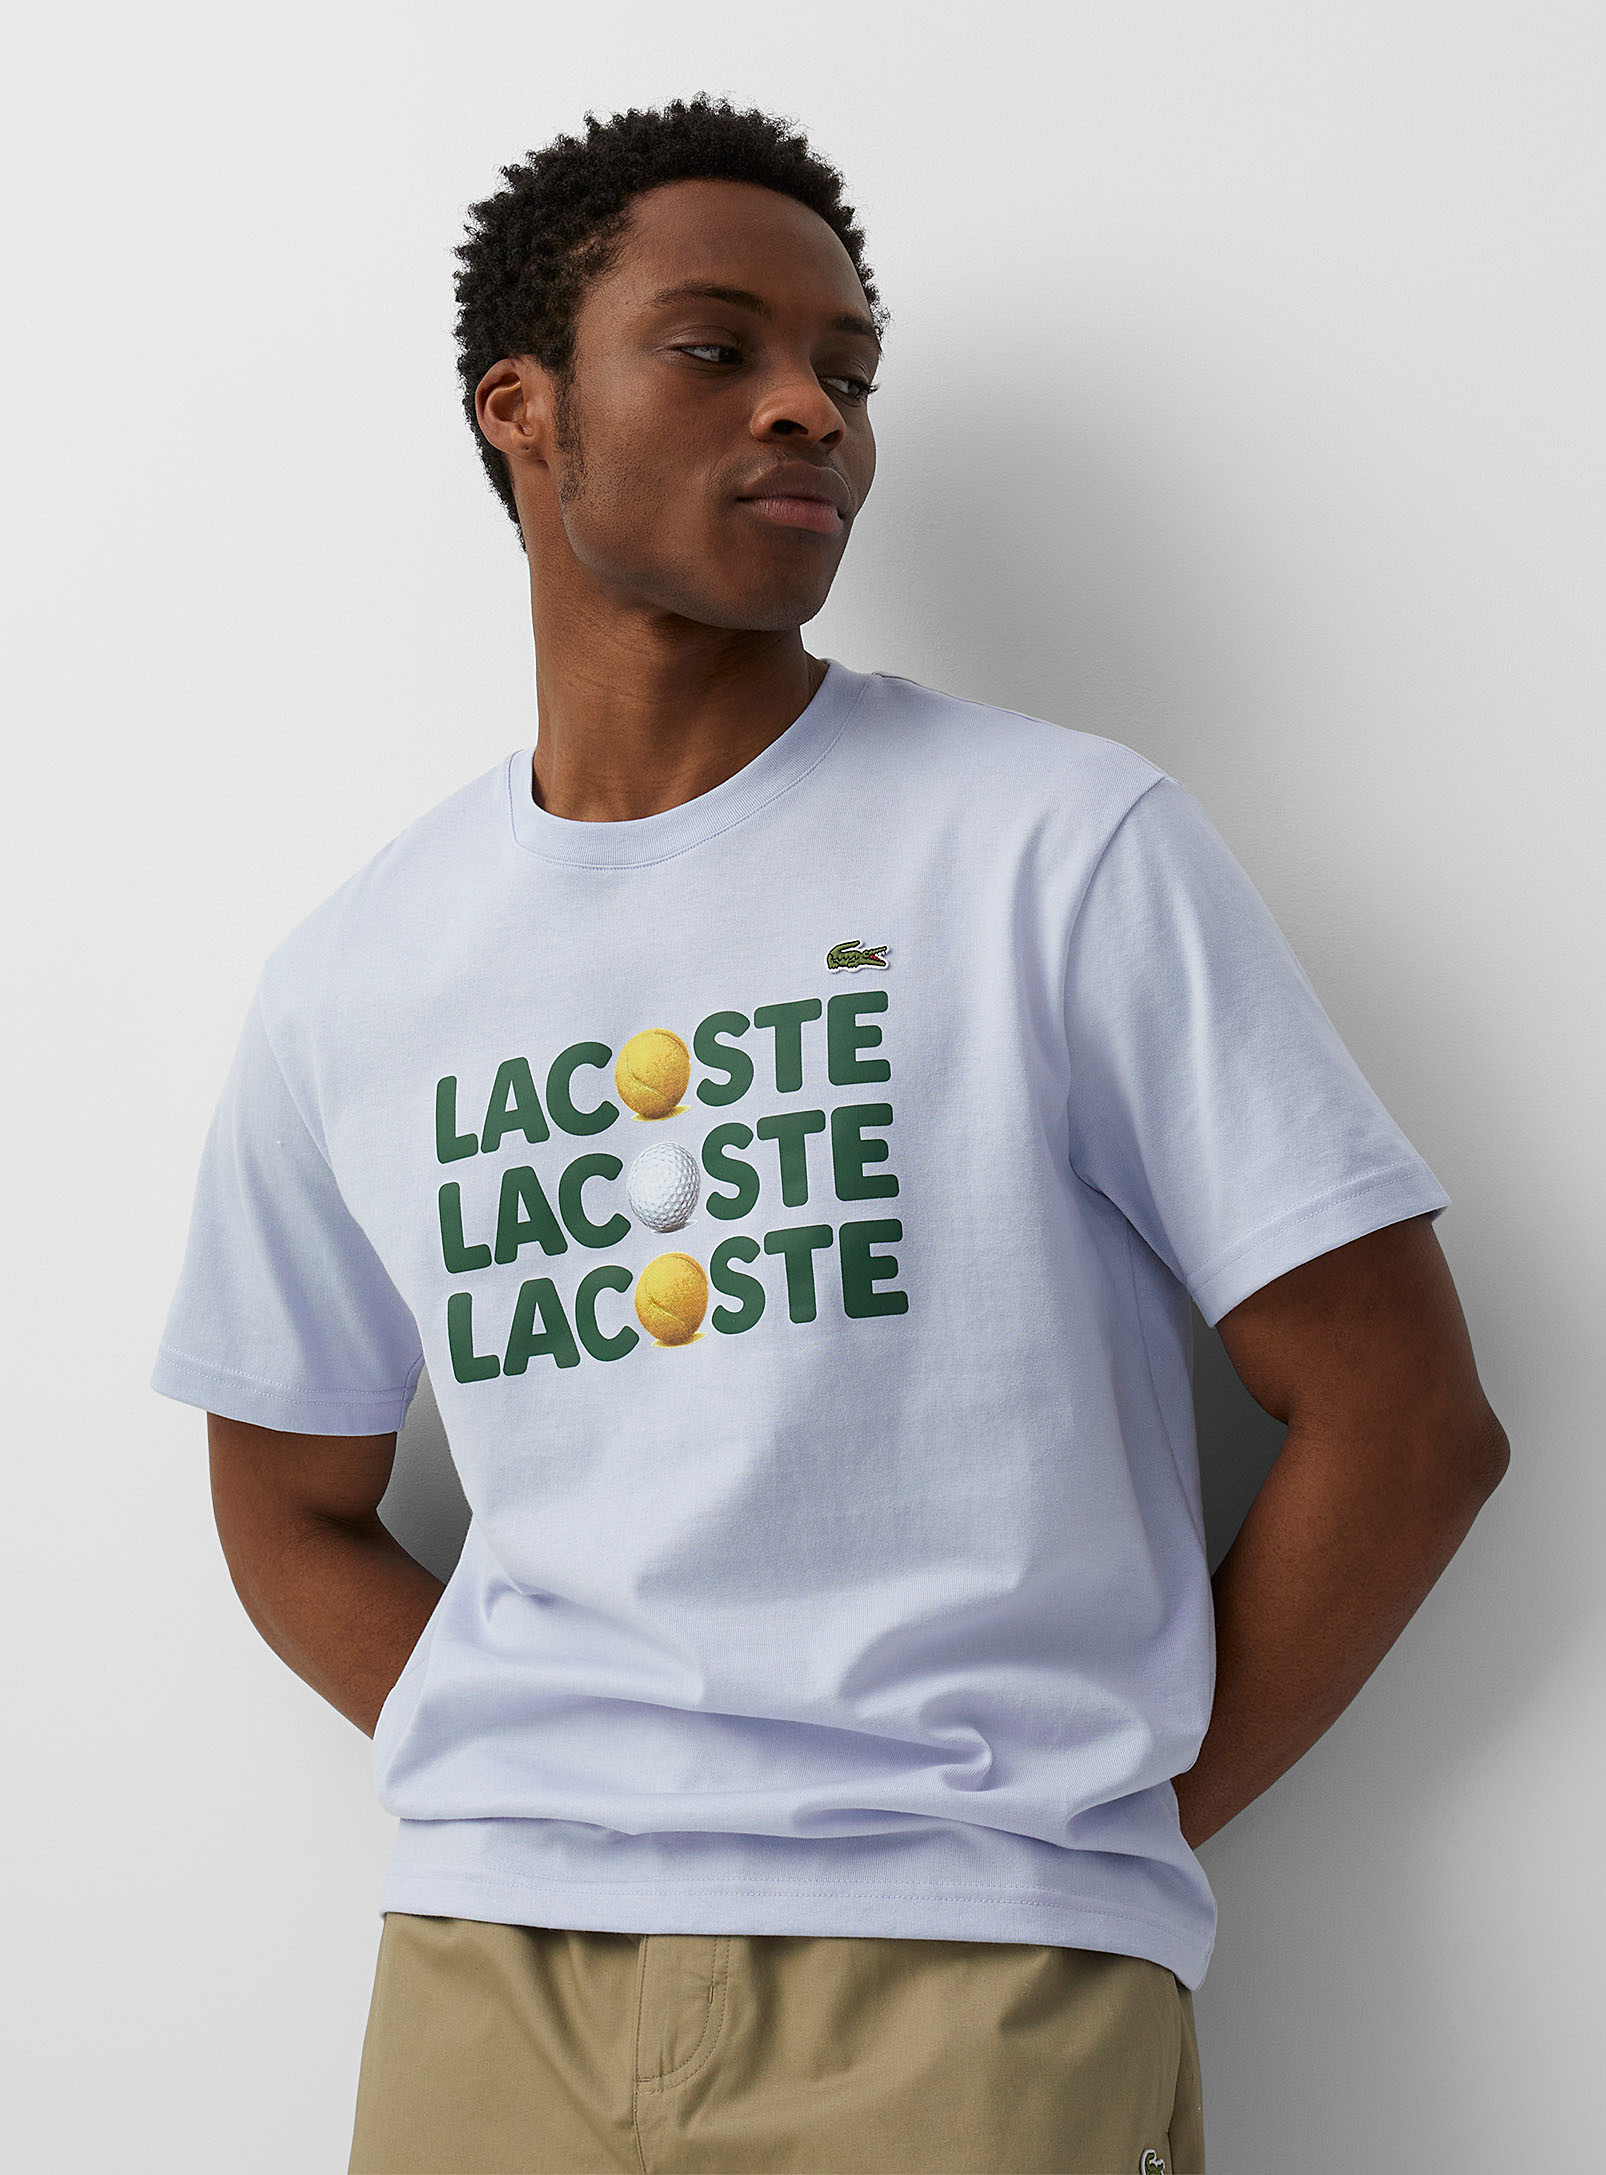 Lacoste - Le t-shirt logo sportif